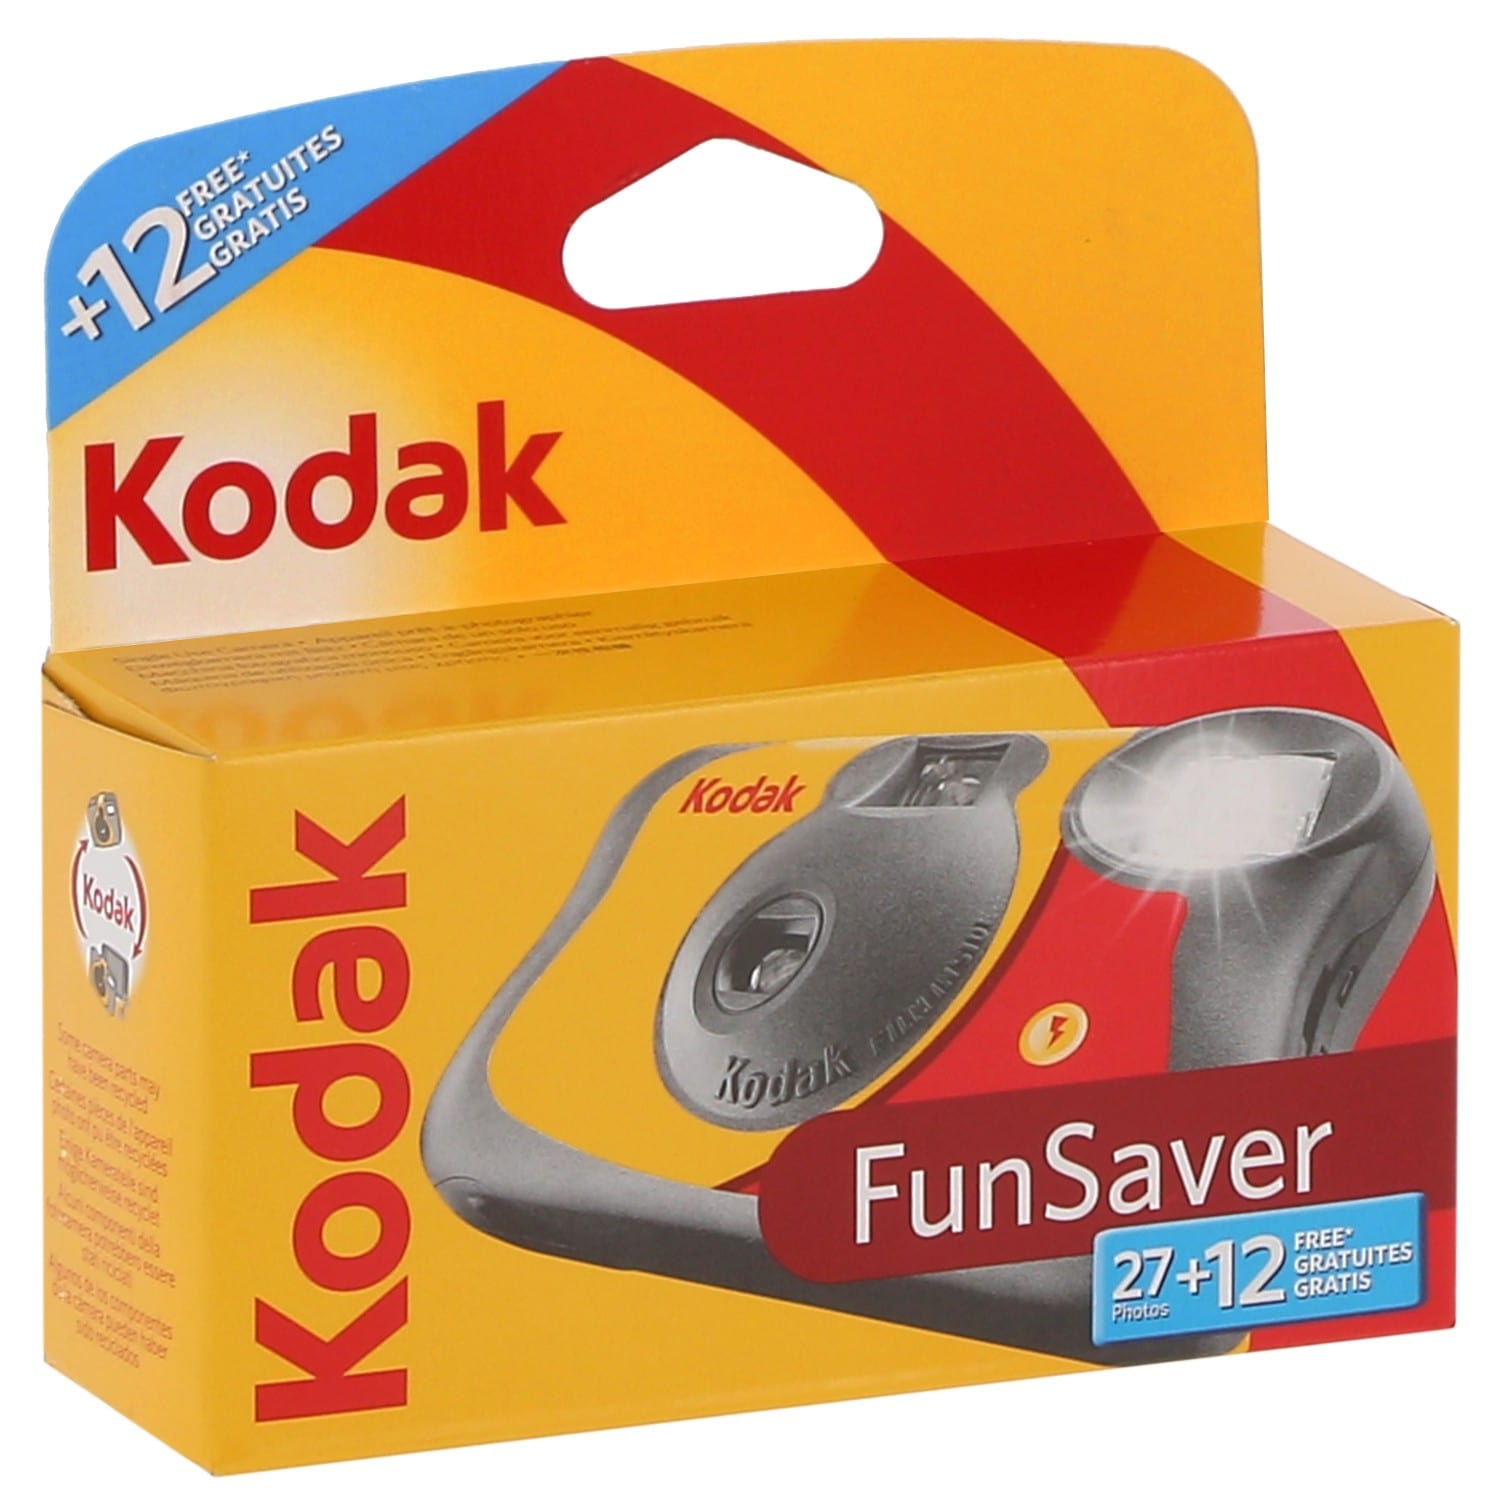 Appareil photo jetable KODAK Fun Saver Flash 800 iso - 27+12 poses  gratuites - Vendu par 10